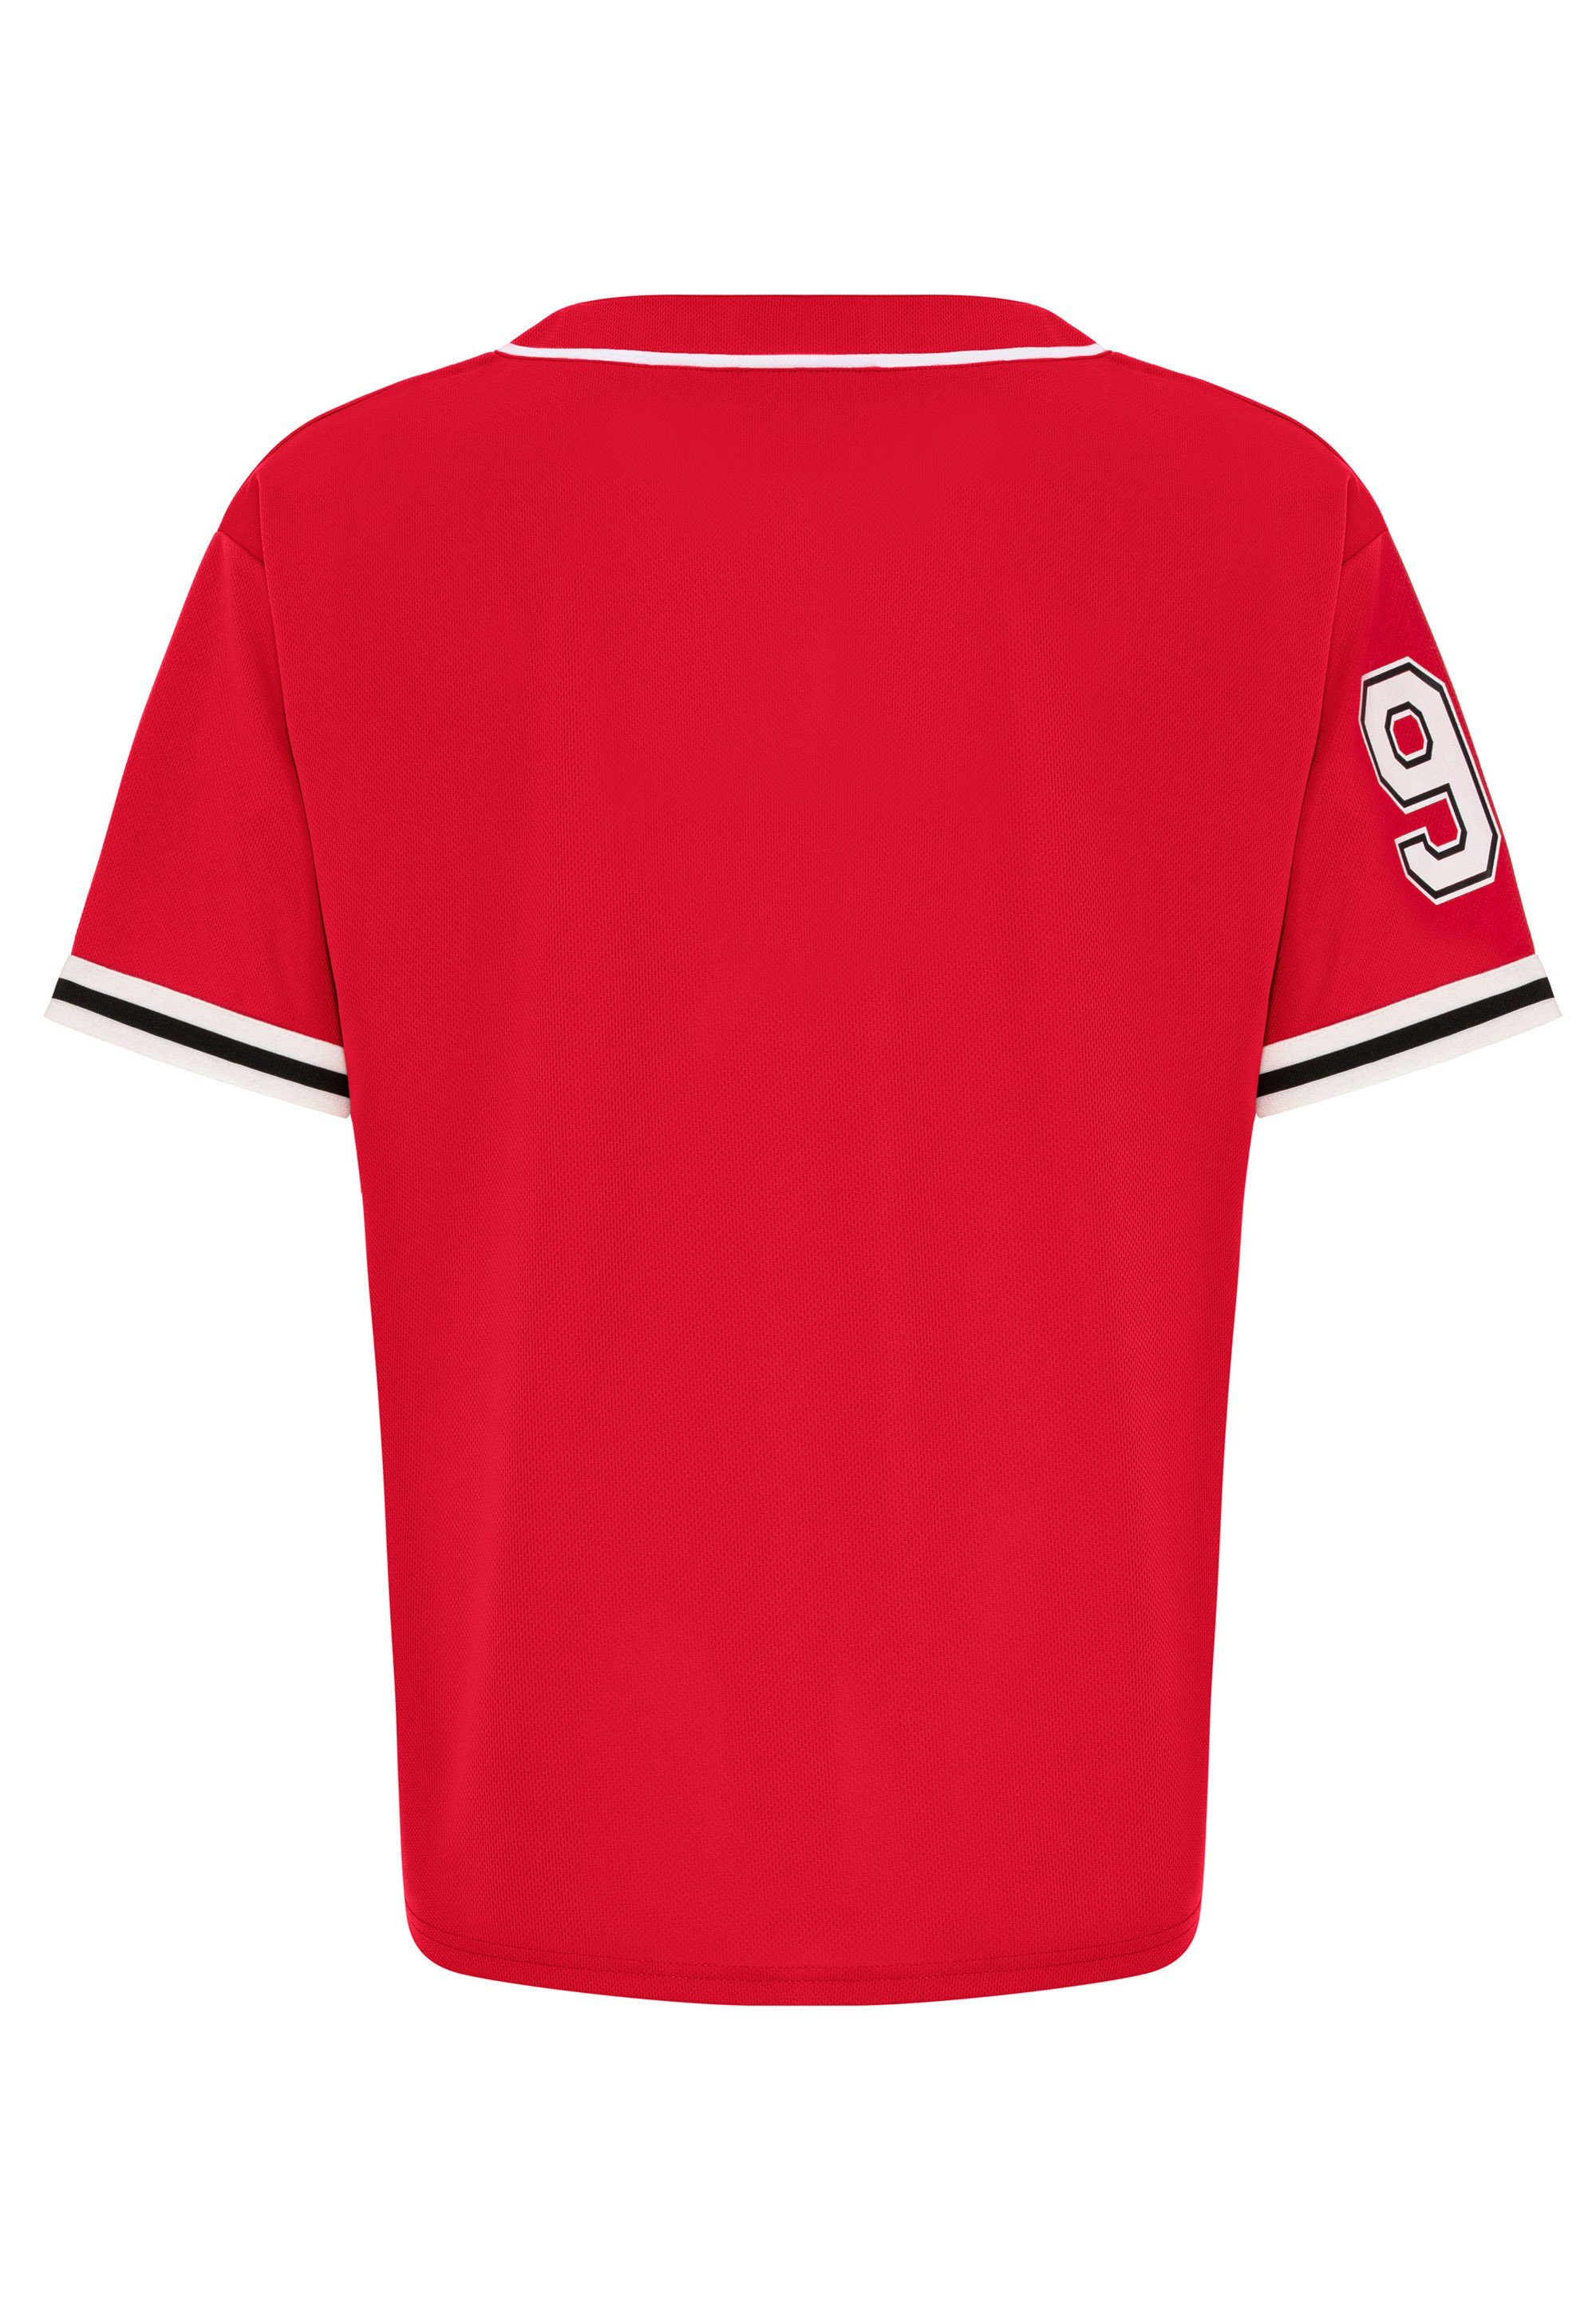 RedBridge T-Shirt mit Prints lässigen rot